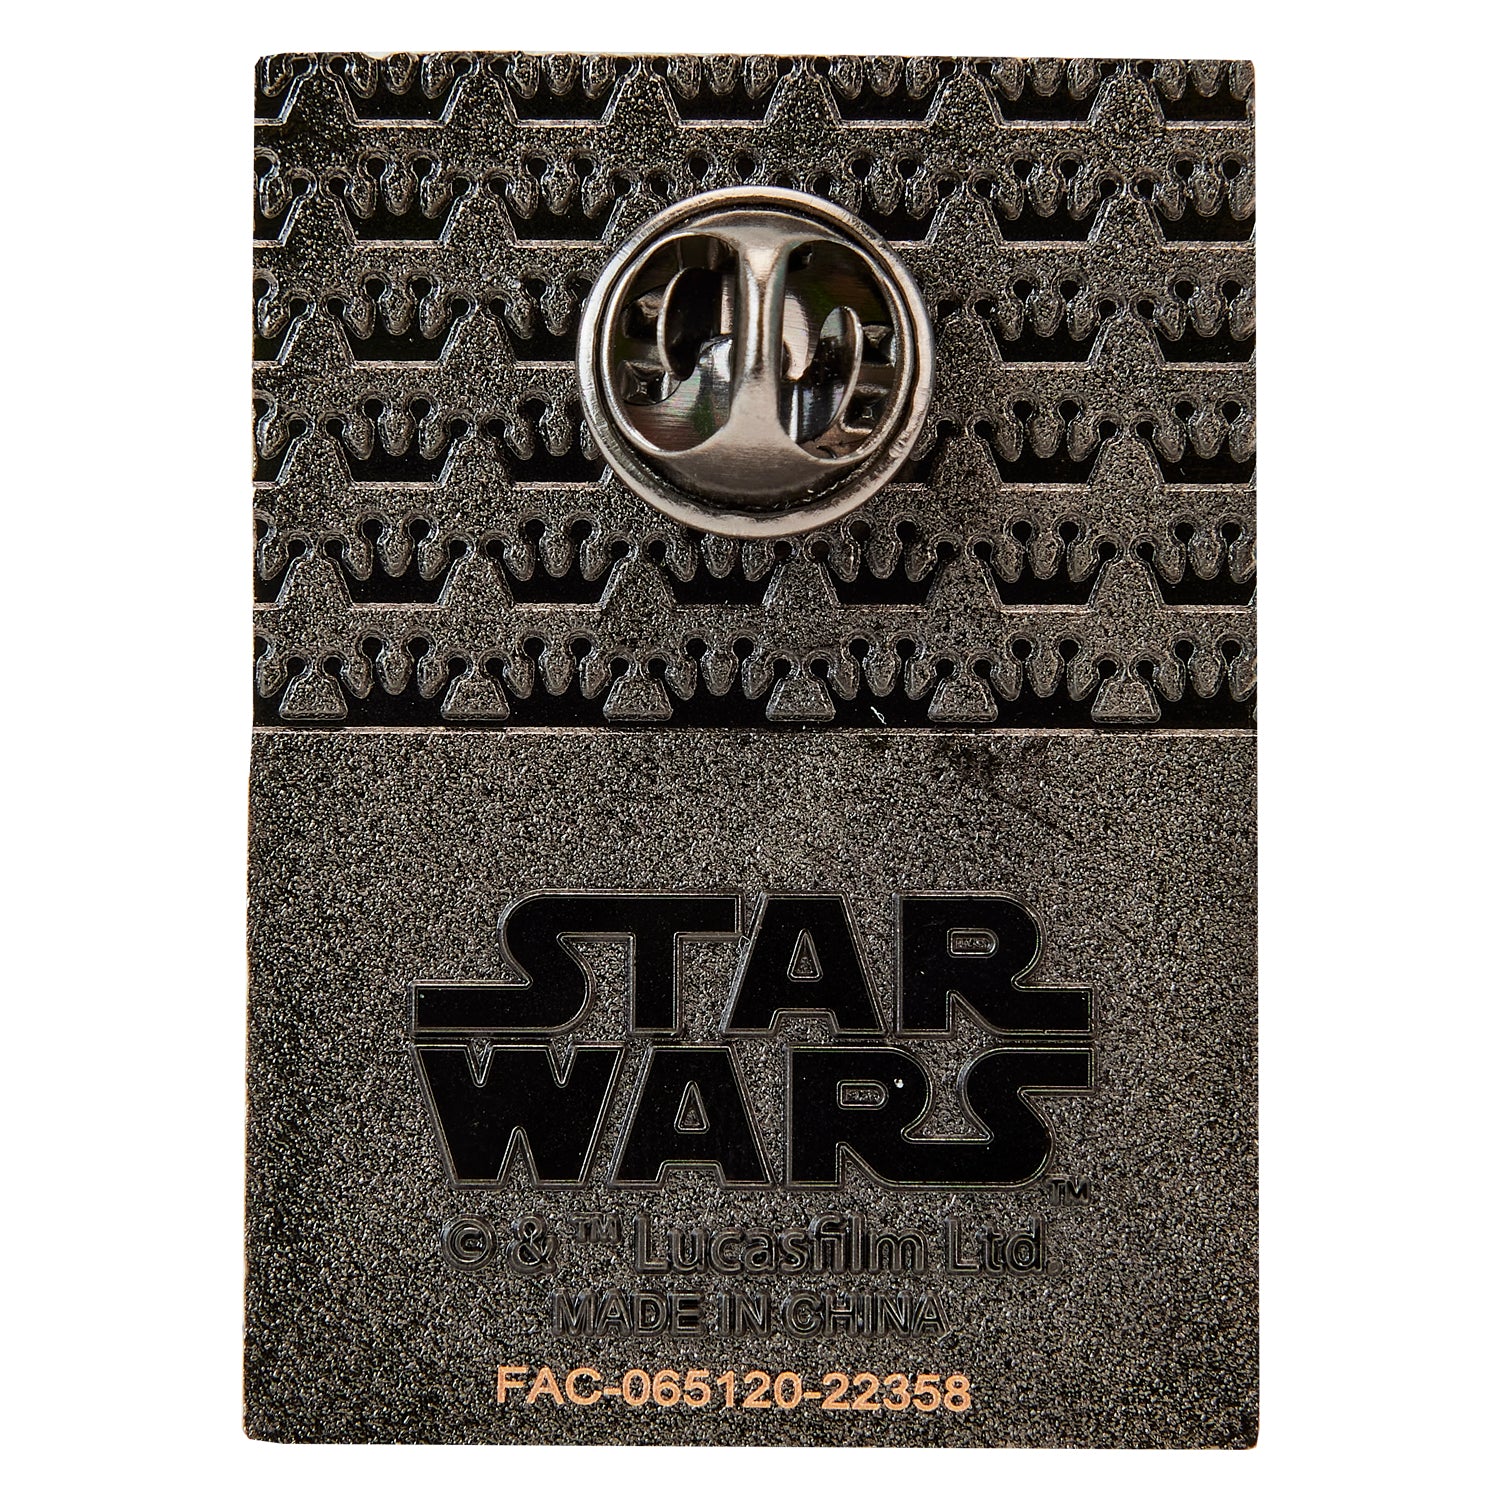 Star Wars | Return of the Jedi International Posters Blind Box Enamel Pin